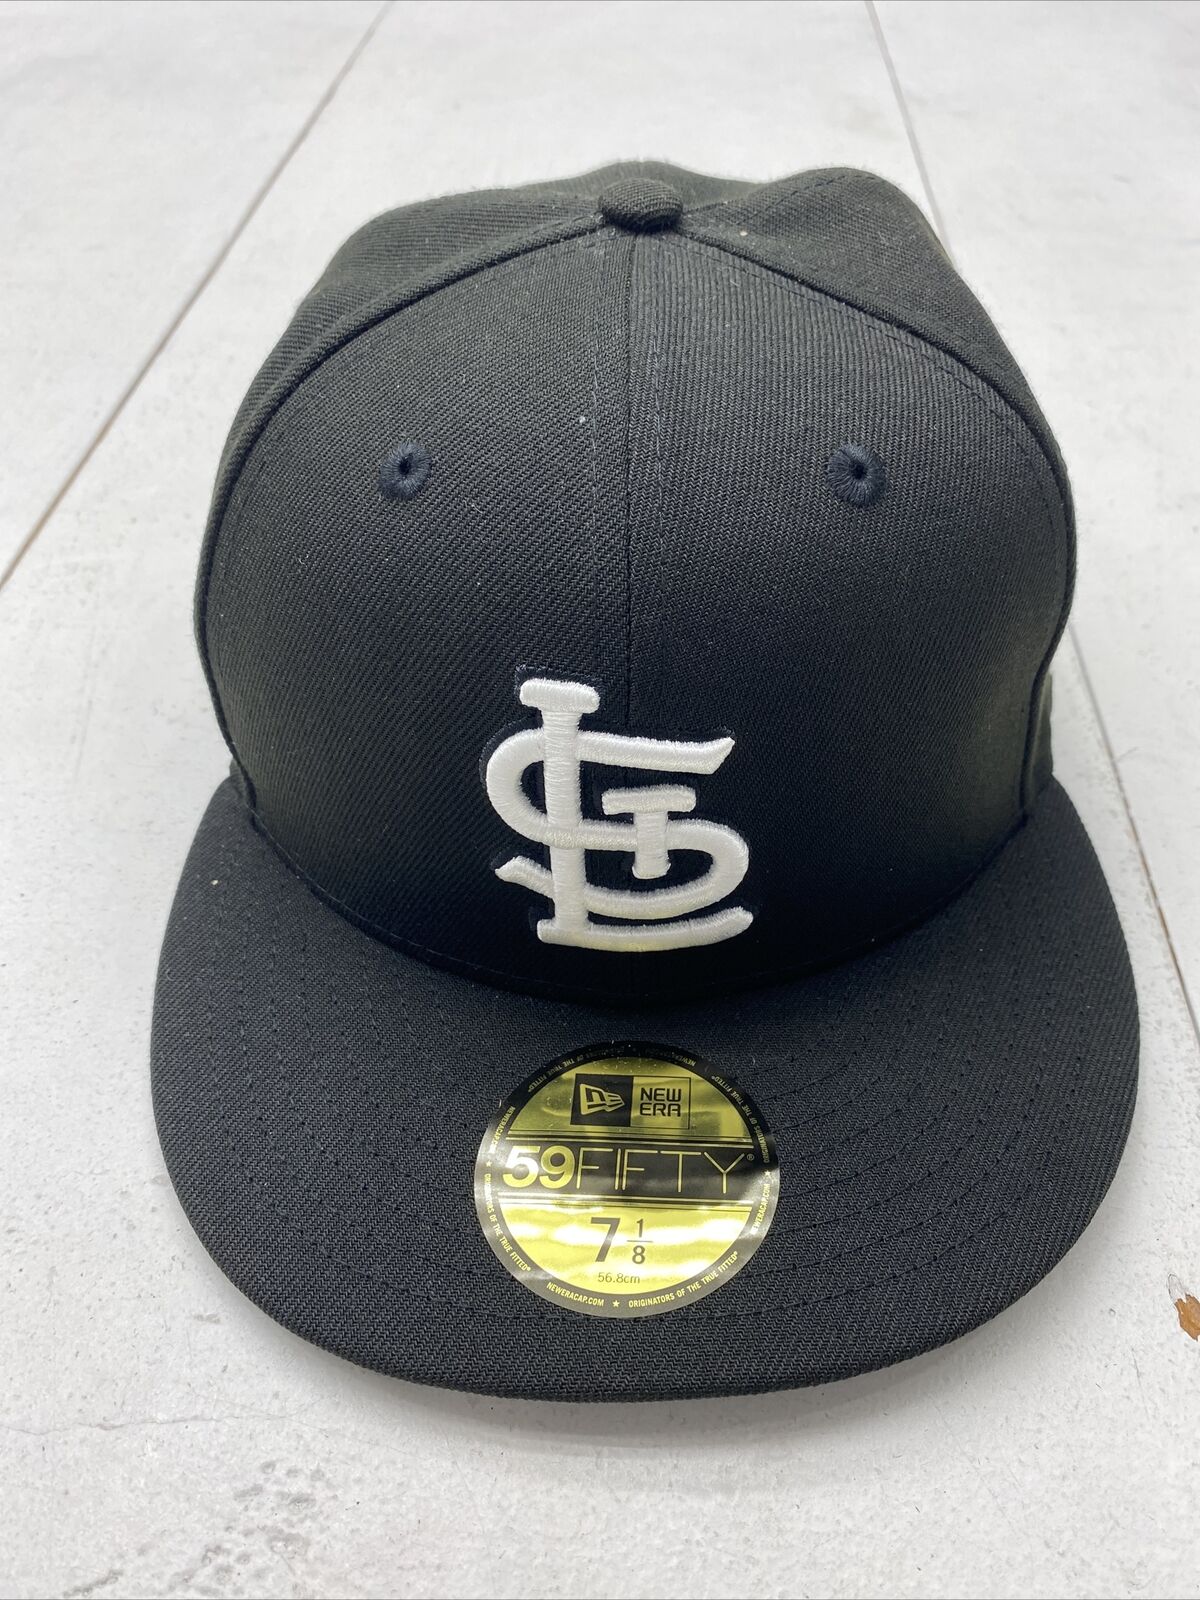 New Era, Accessories, St Louis Cardinals Baseball Cap Size 7 4